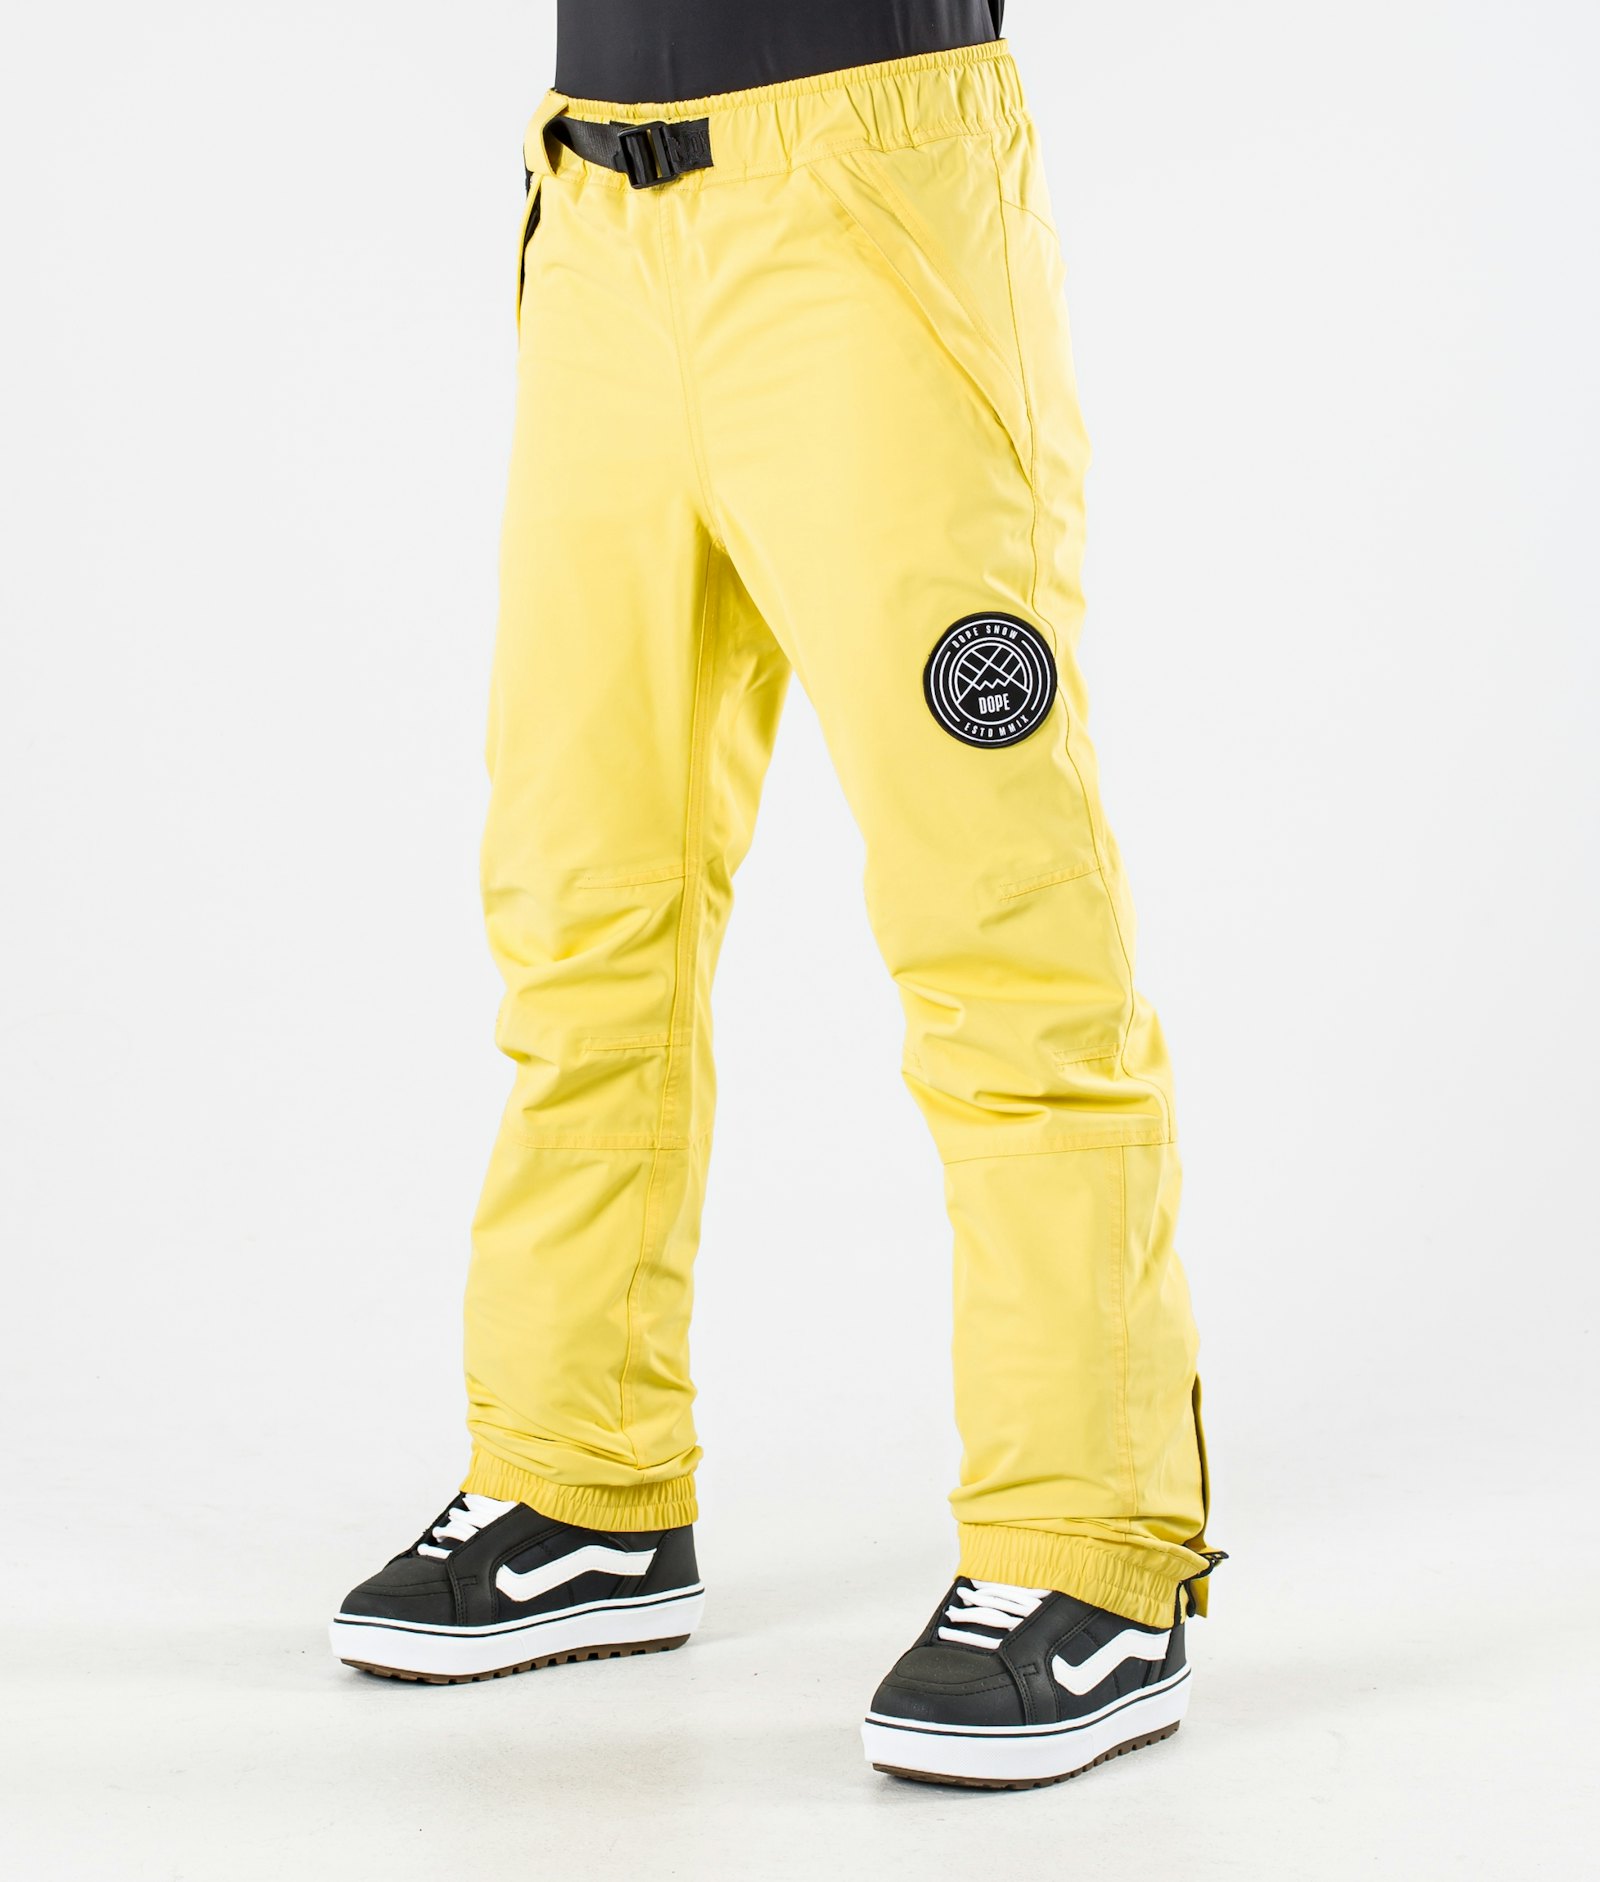 Blizzard W 2020 Pantalon de Snowboard Femme Faded Yellow